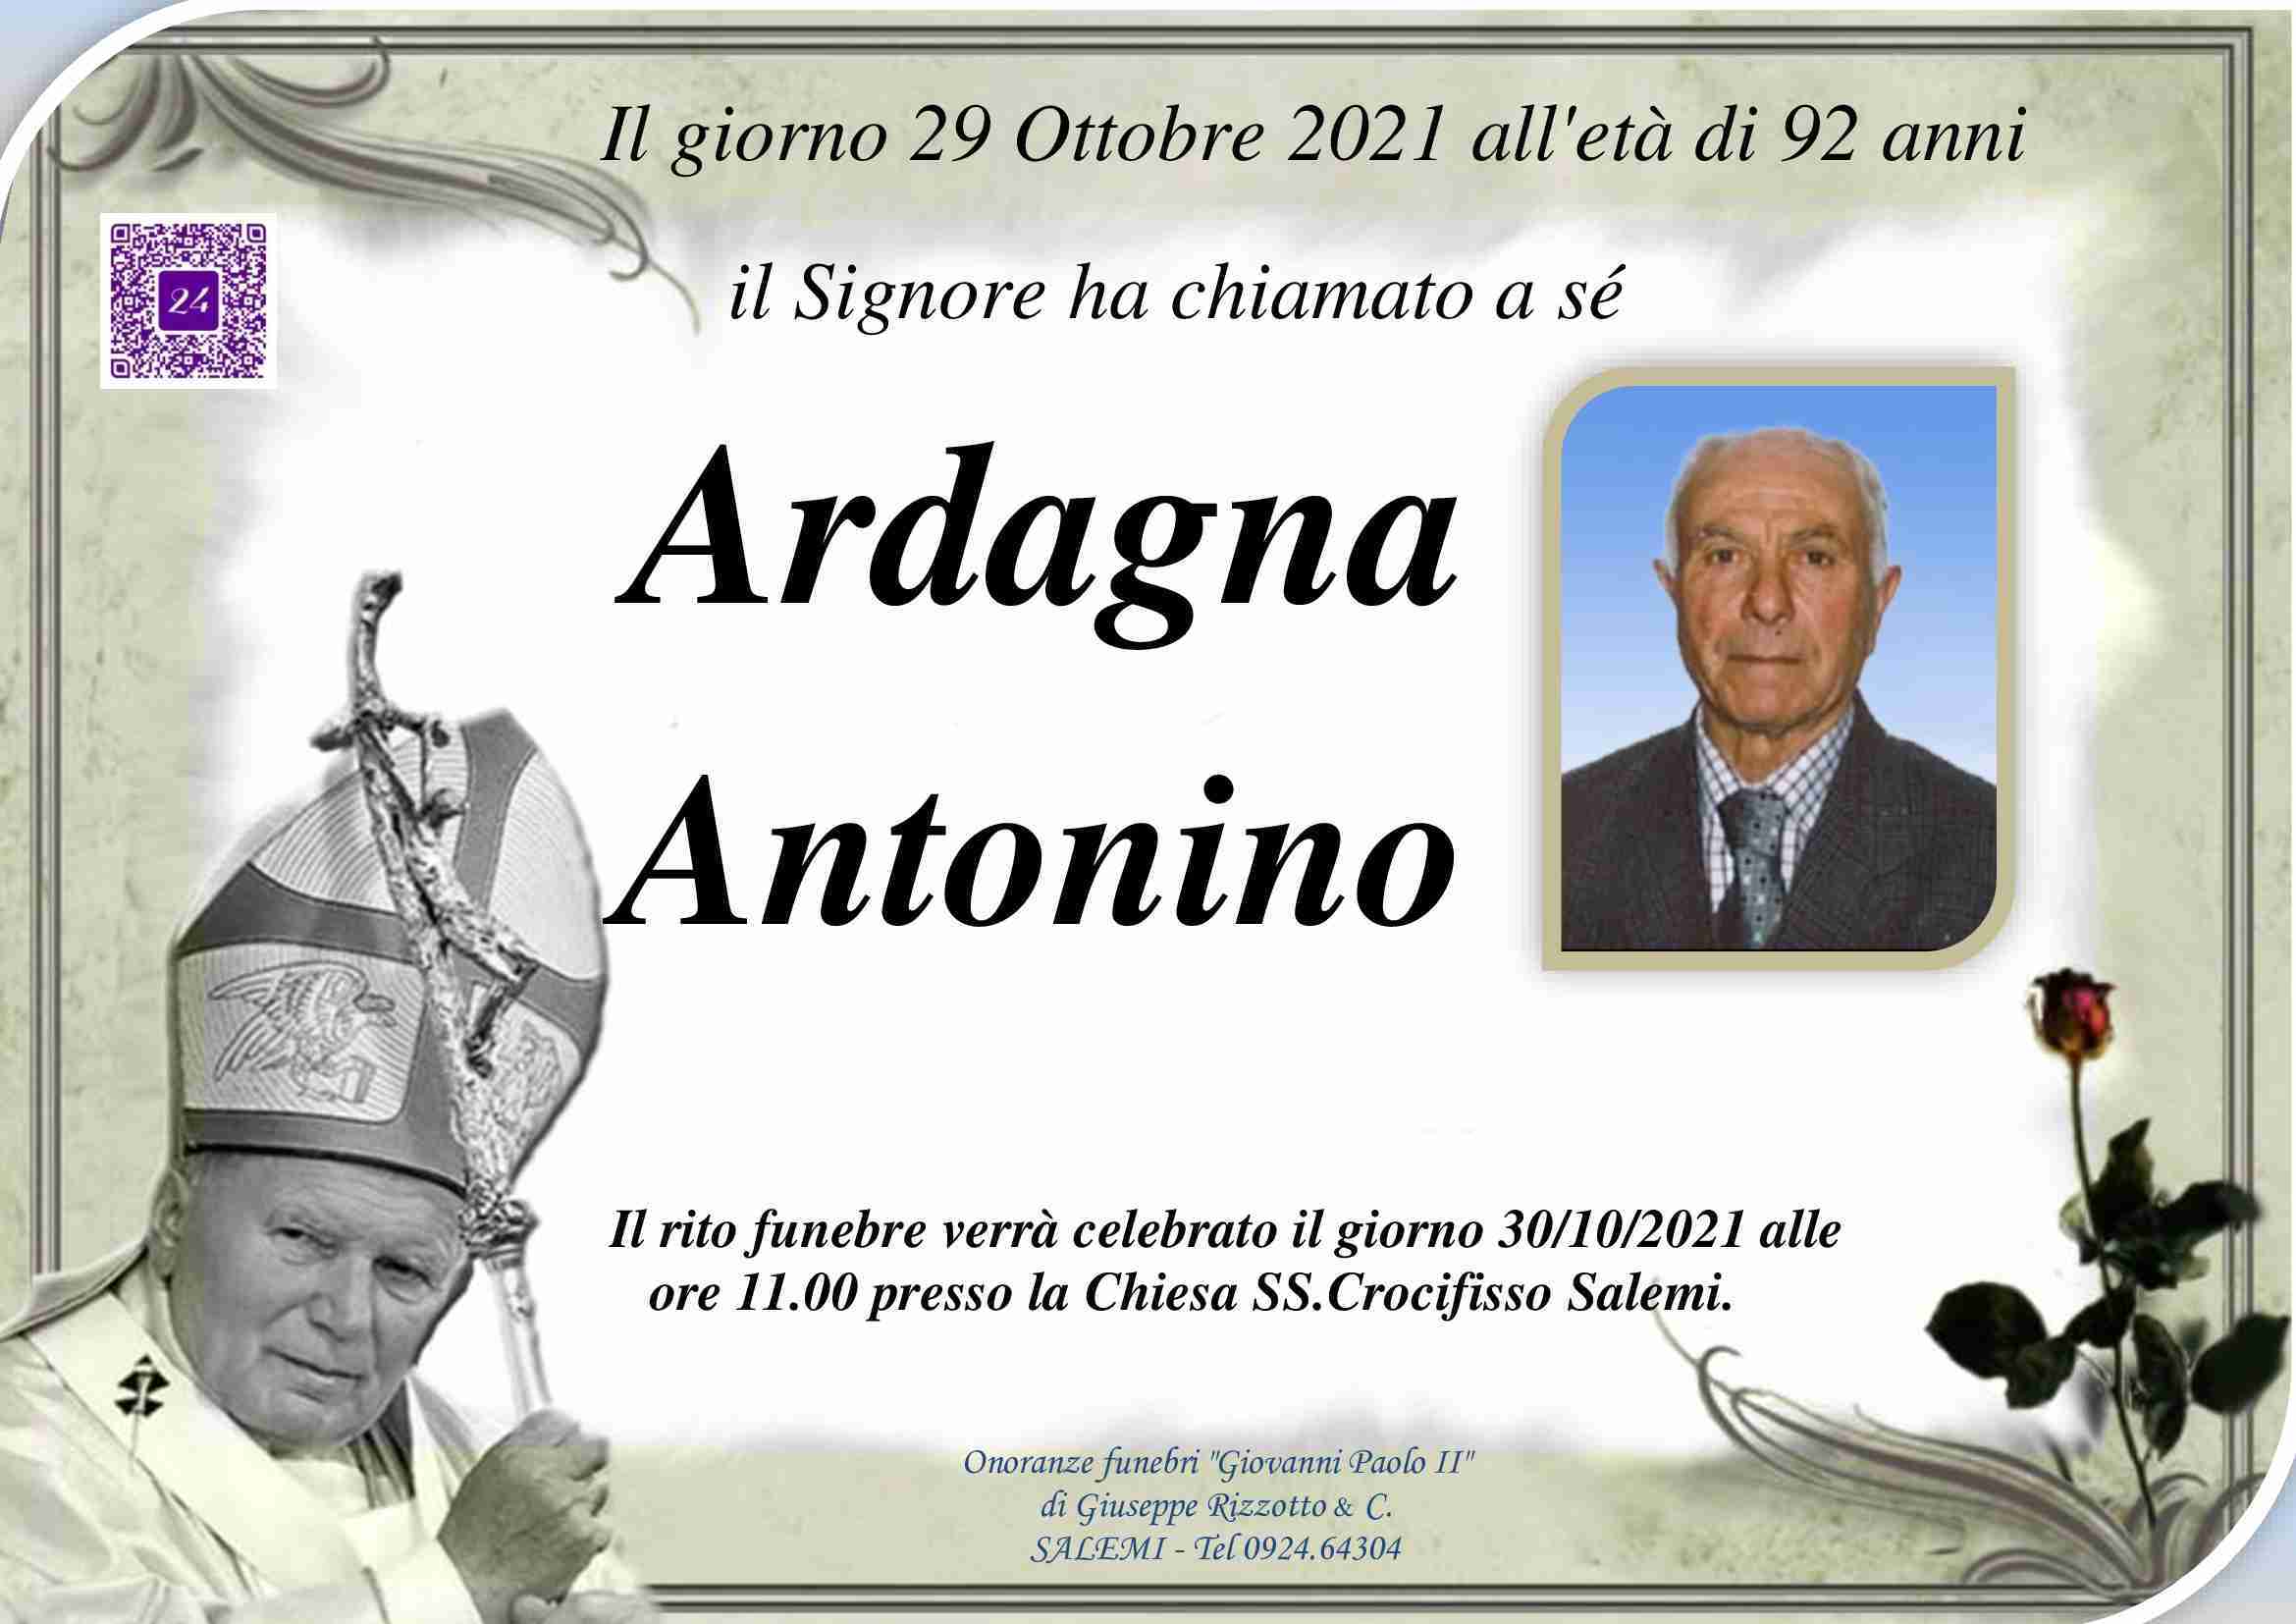 Antonino Ardagna